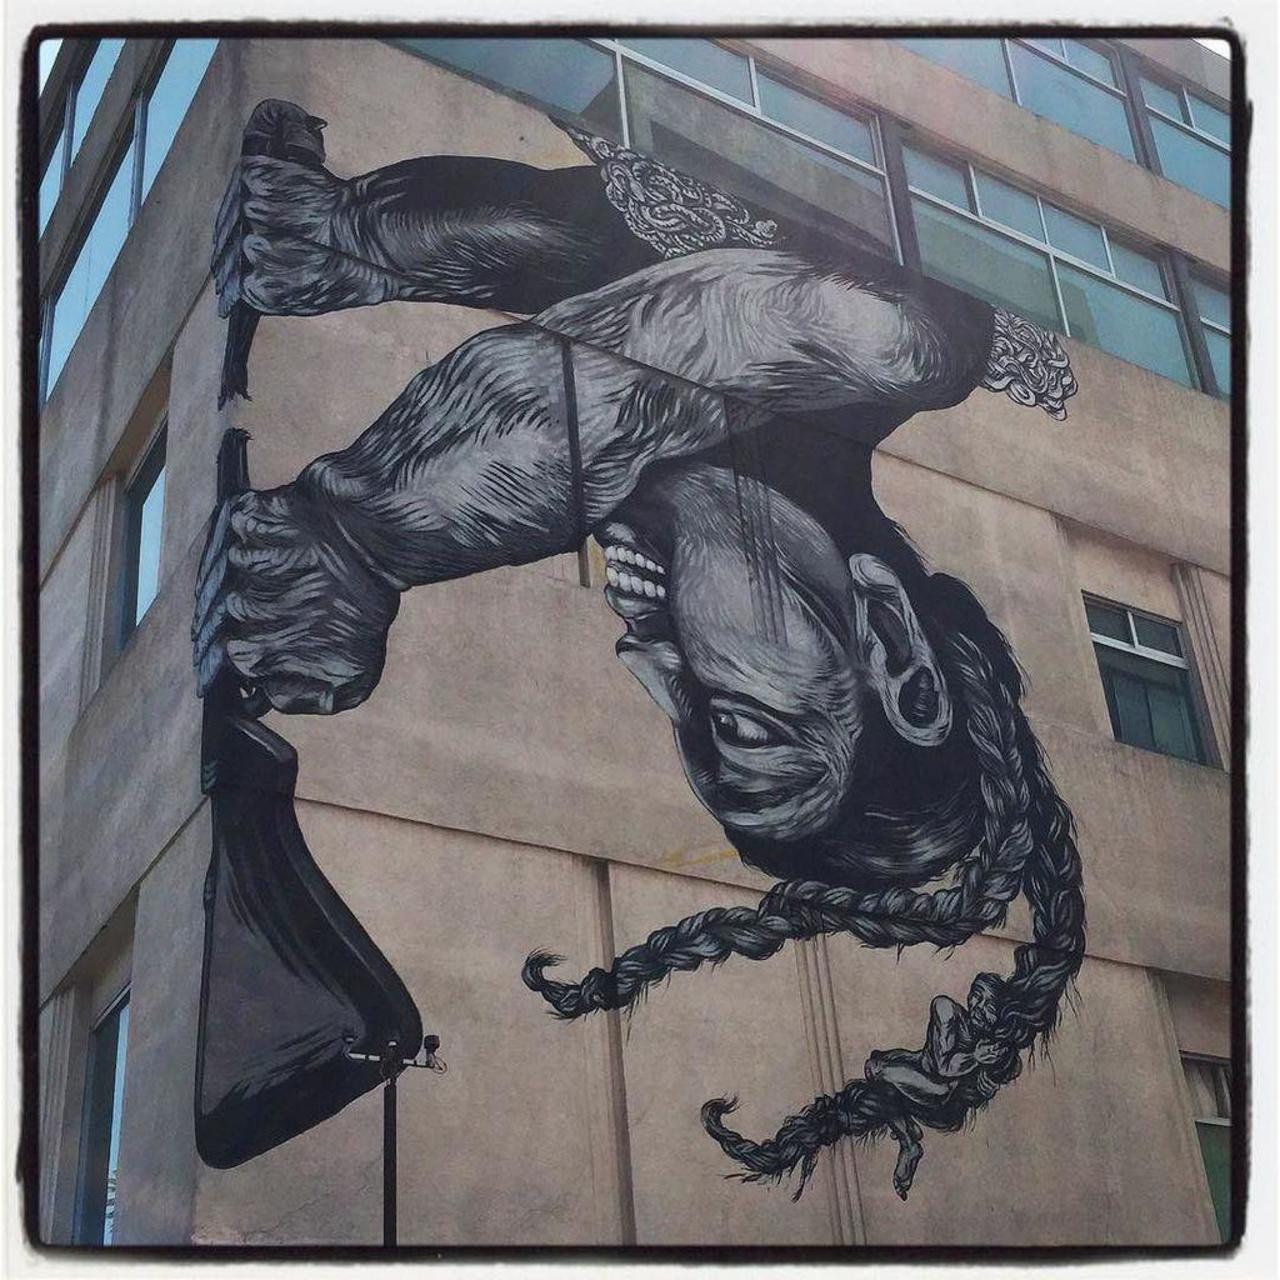 RT @StArtEverywhere: De cabeza. Upside down. #streetart #streetartmexico #arteurbano #art #graffiti by analuisanaluisa http://t.co/B8tVxVczlR